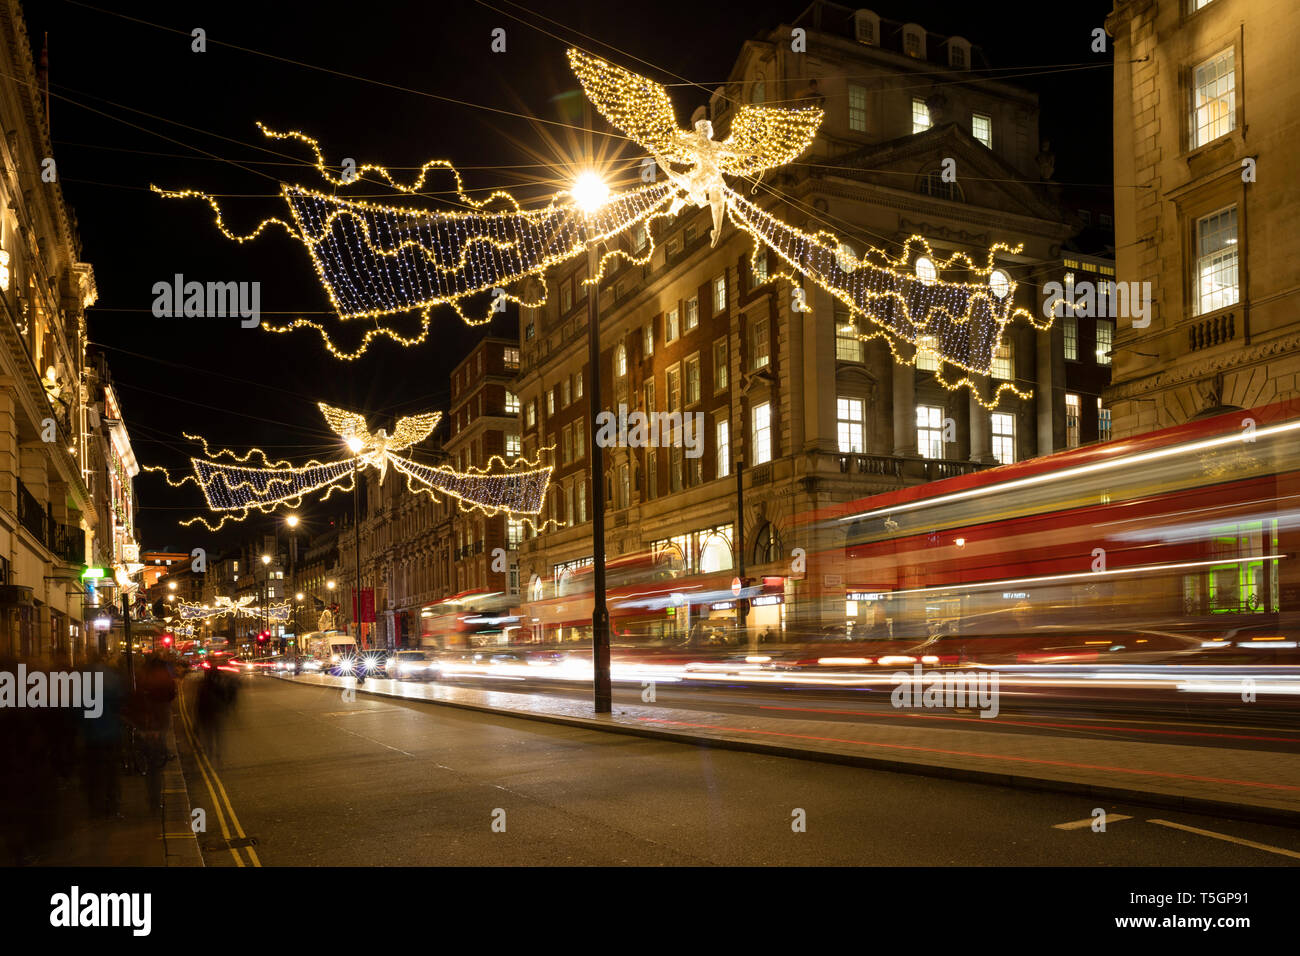 United Kingdom, England, London, Piccadilly Circus, Bus, Christmas illumination at night Stock Photo